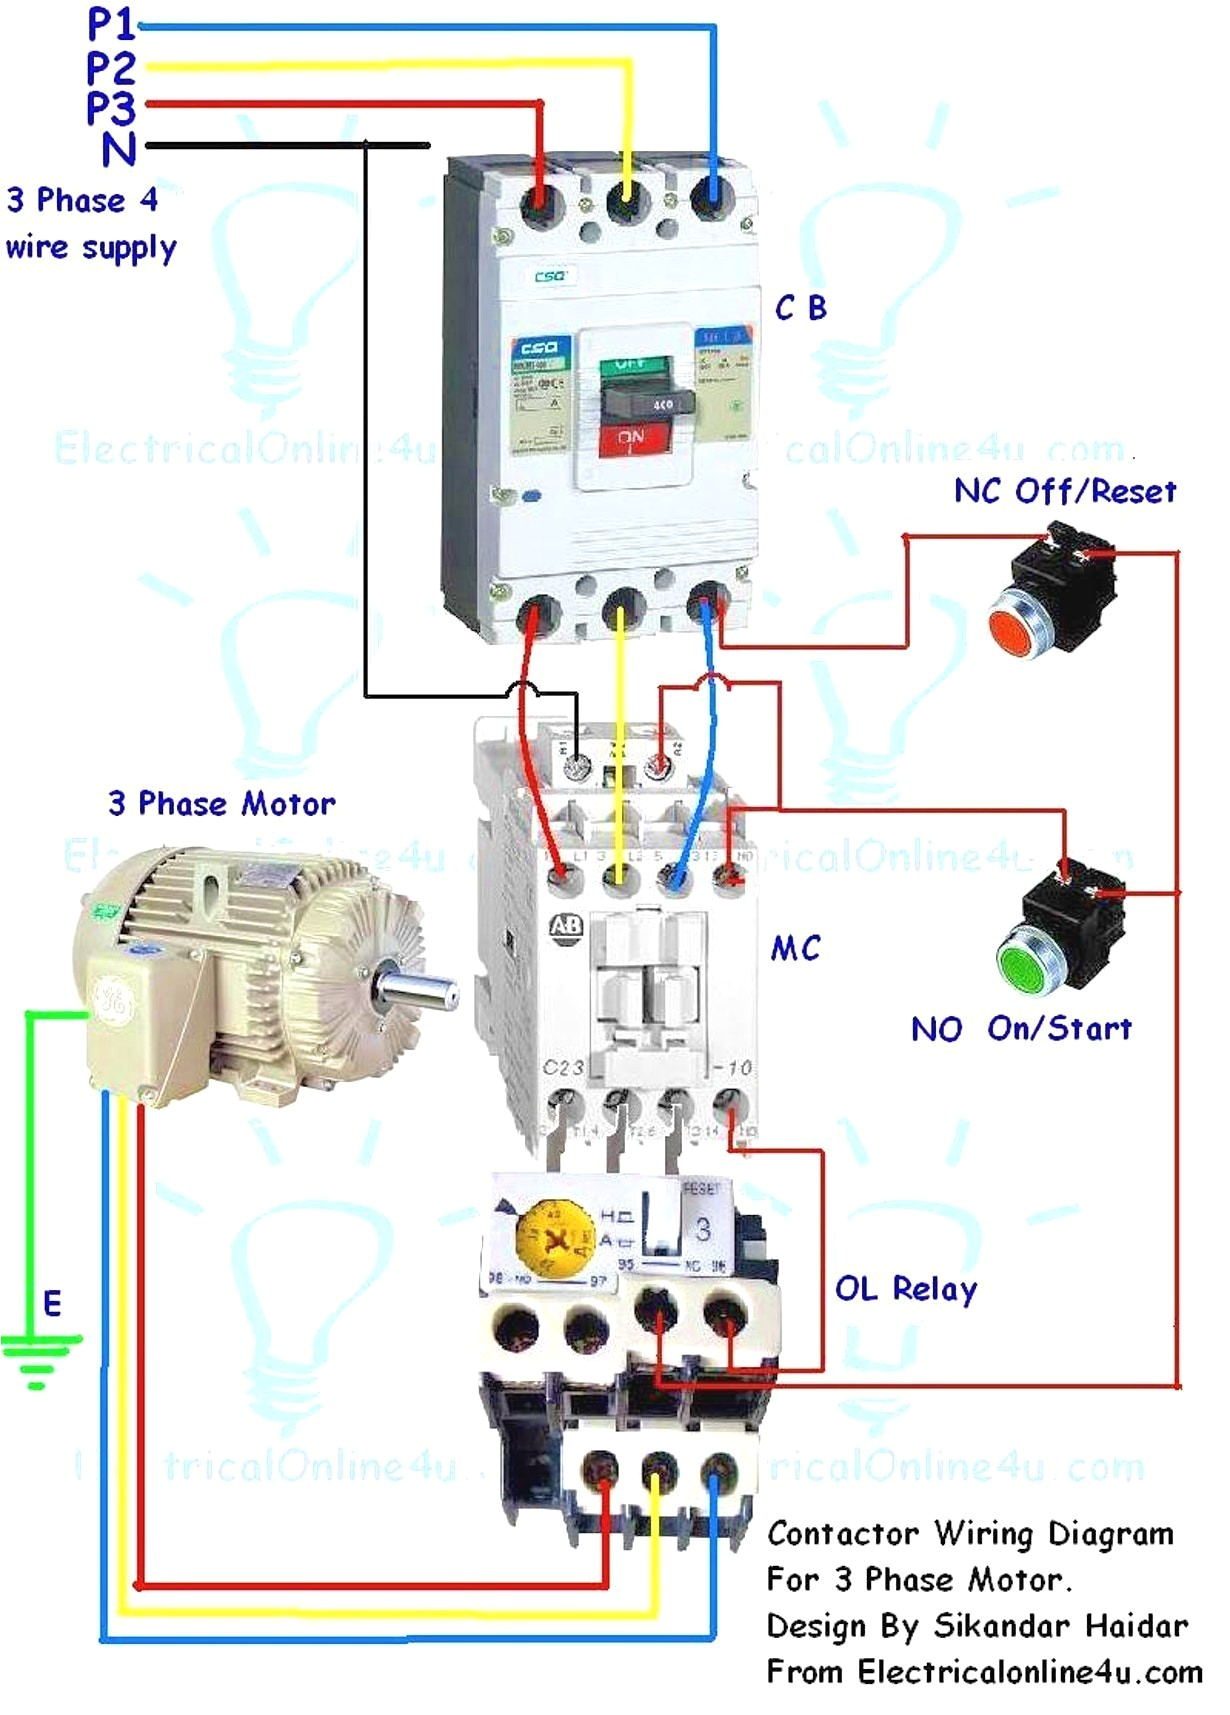 contactor wiring pdf wiring diagram expert contactor relay wiring contactor diagram pdf data wiring diagram contactor